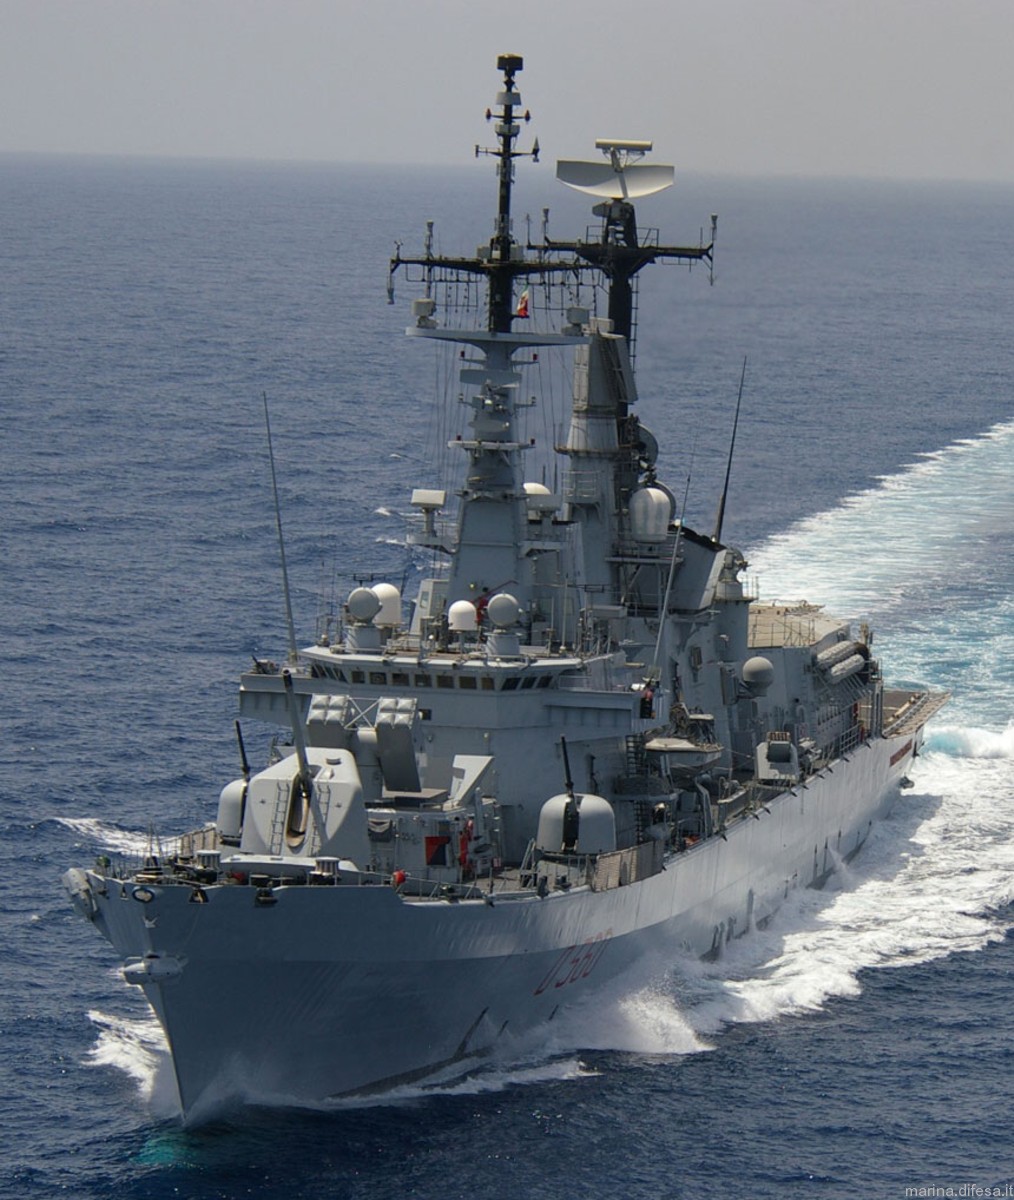 d-560 luigi durand de la penne its nave guided missile destroyer ddg italian navy marina militare 31